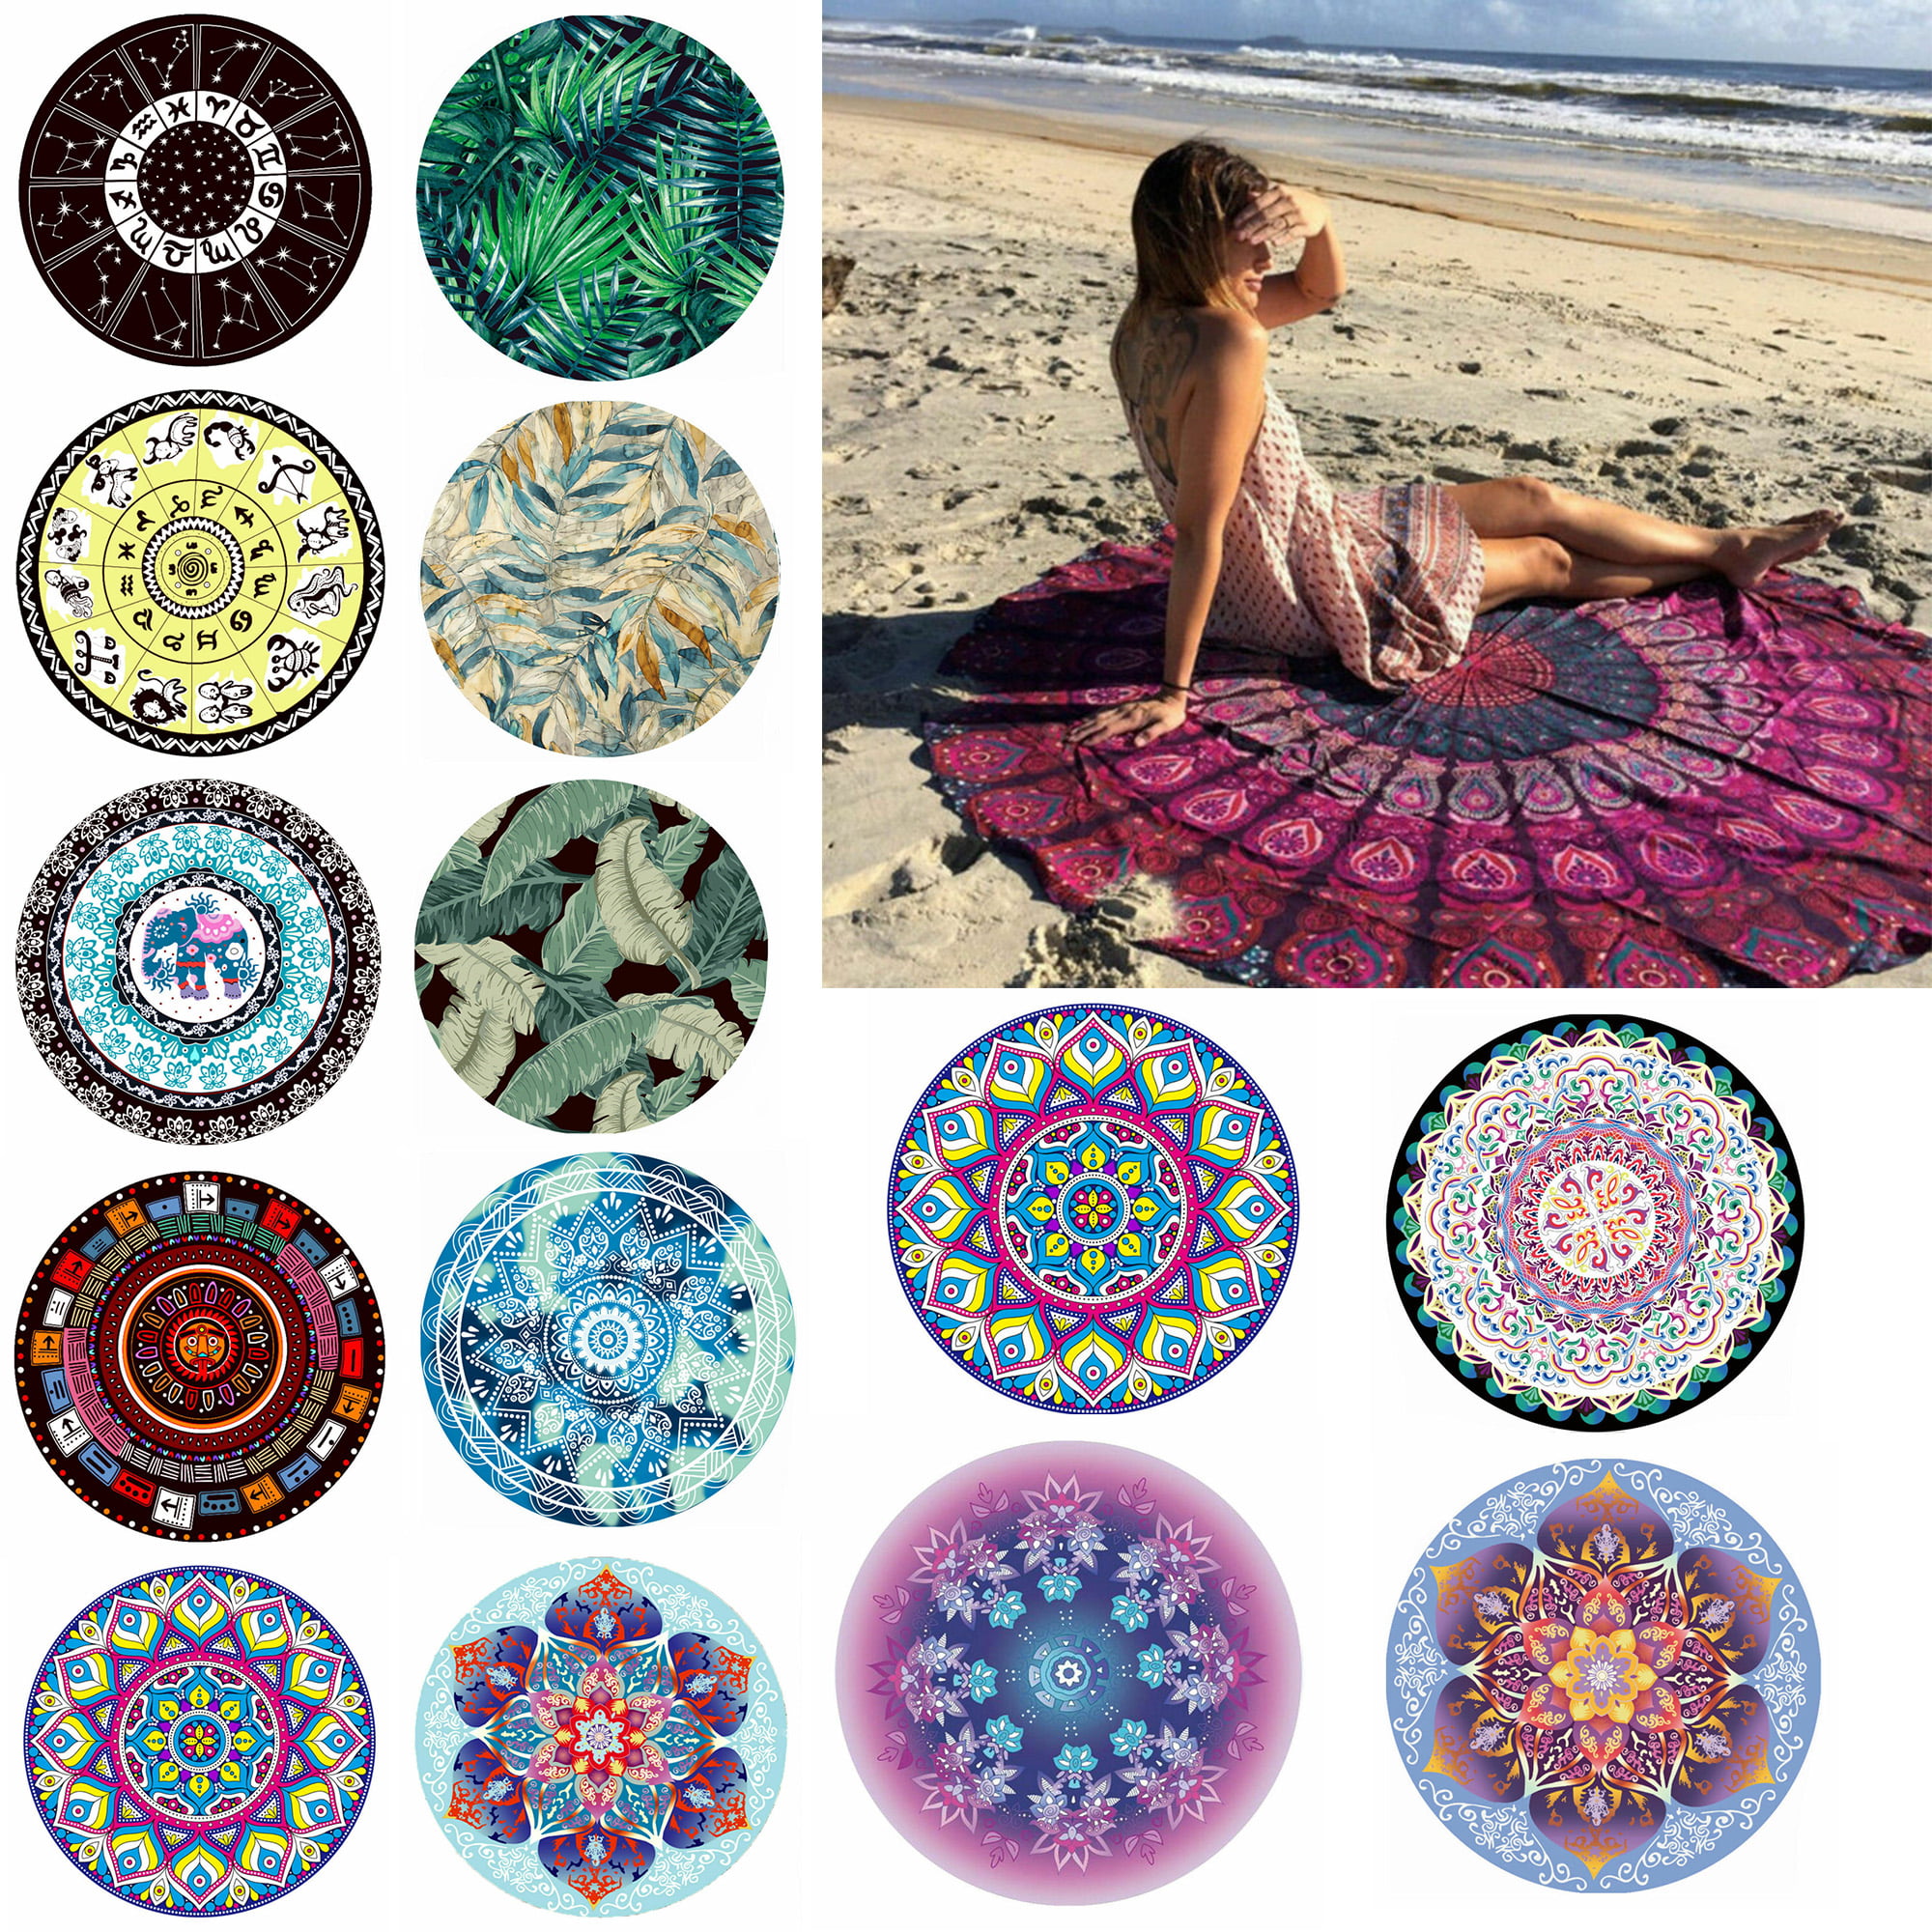 Mandala Round Tapestry Hippie Bohemian Throw Yoga Beach Indian Blanket Towel Mat 